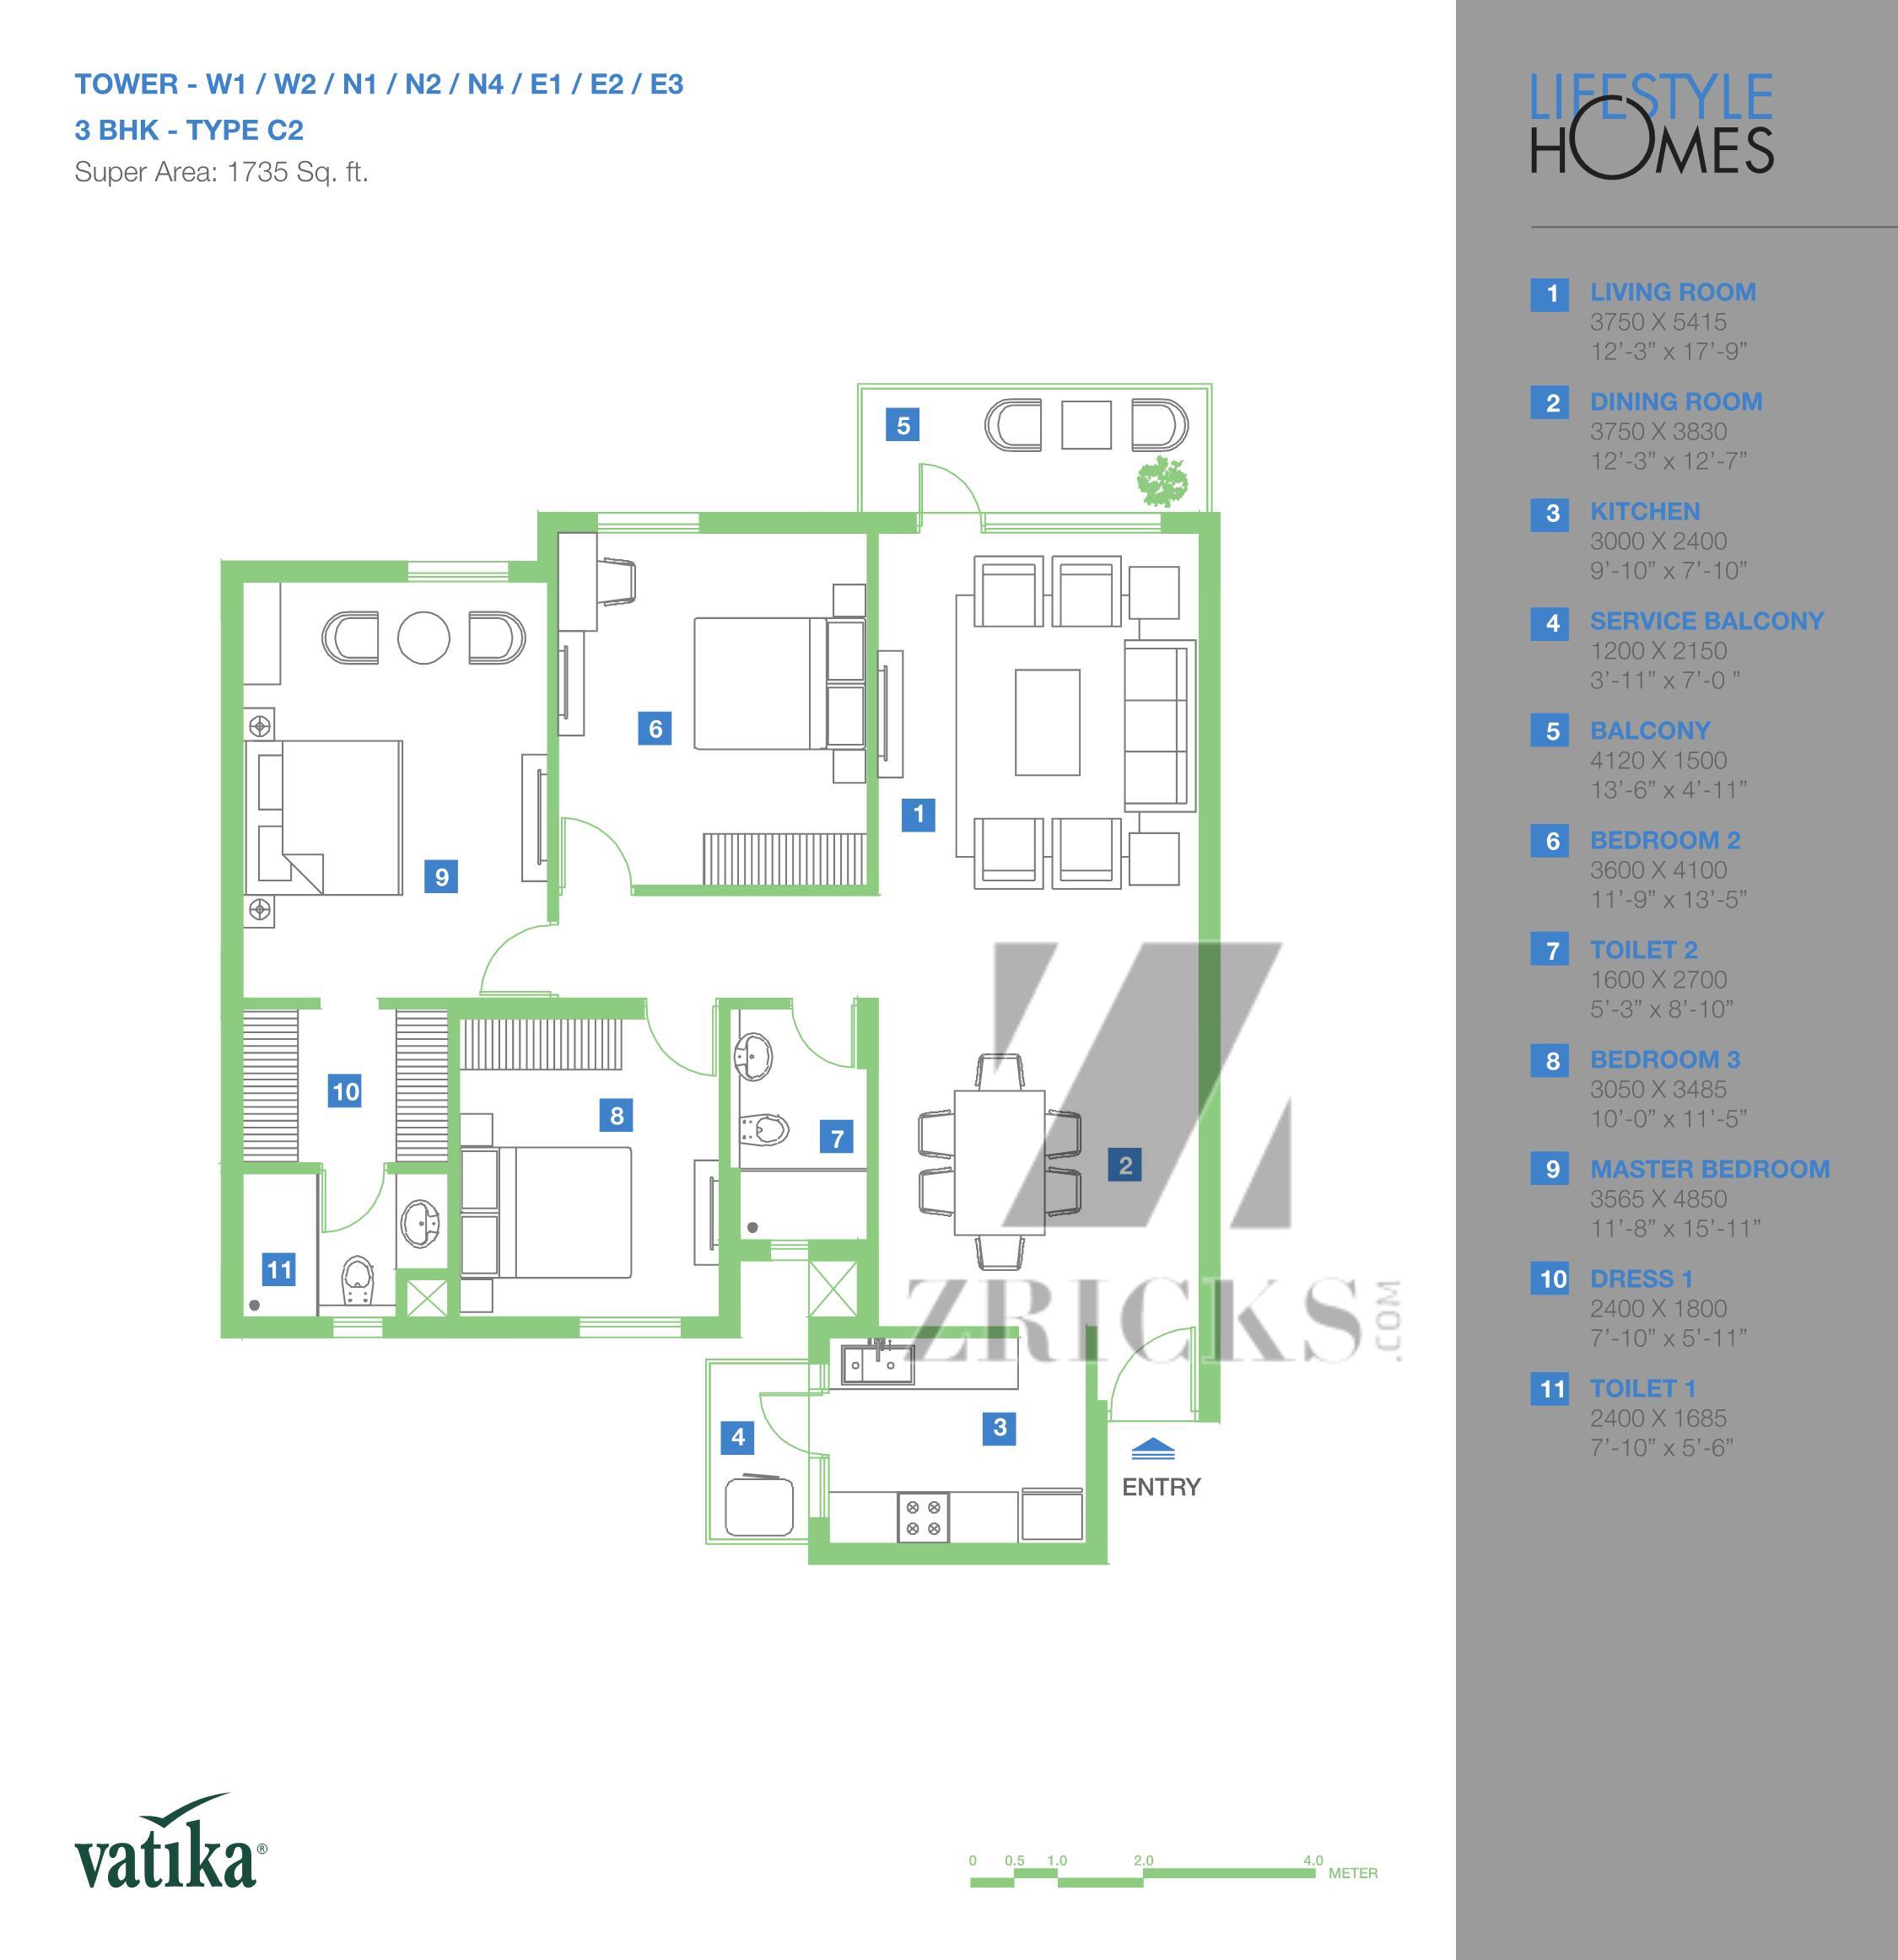 Vatika Lifestyle Homes Floor Plan